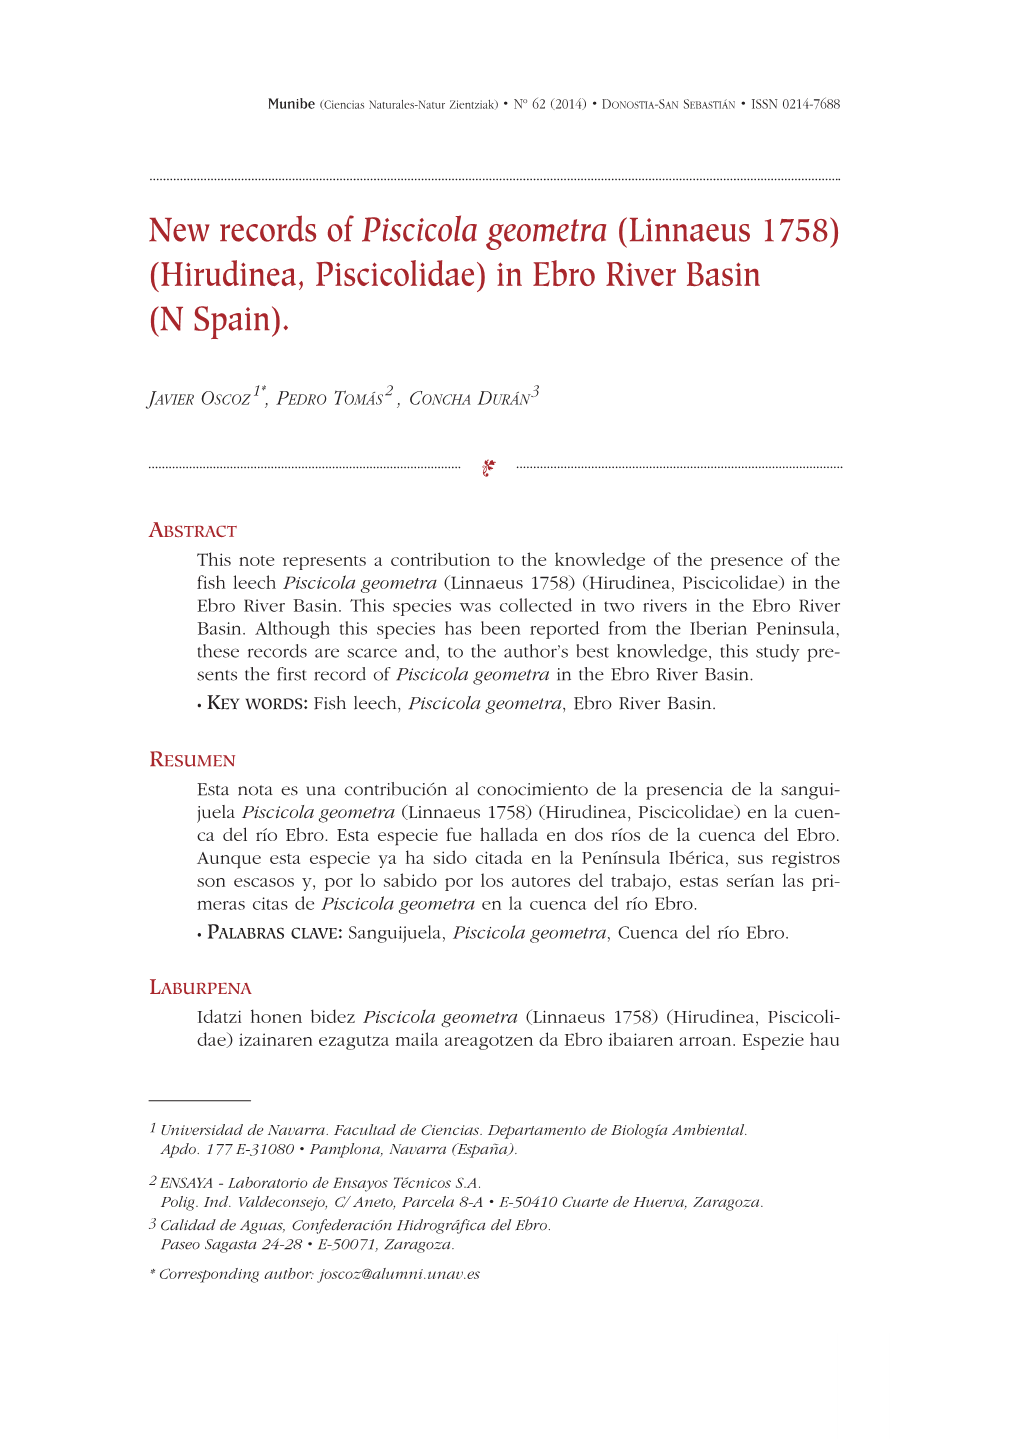 New Records of Piscicola Geometra (Linnaeus 1758) (Hirudinea, Piscicolidae) in Ebro River Basin (N Spain)